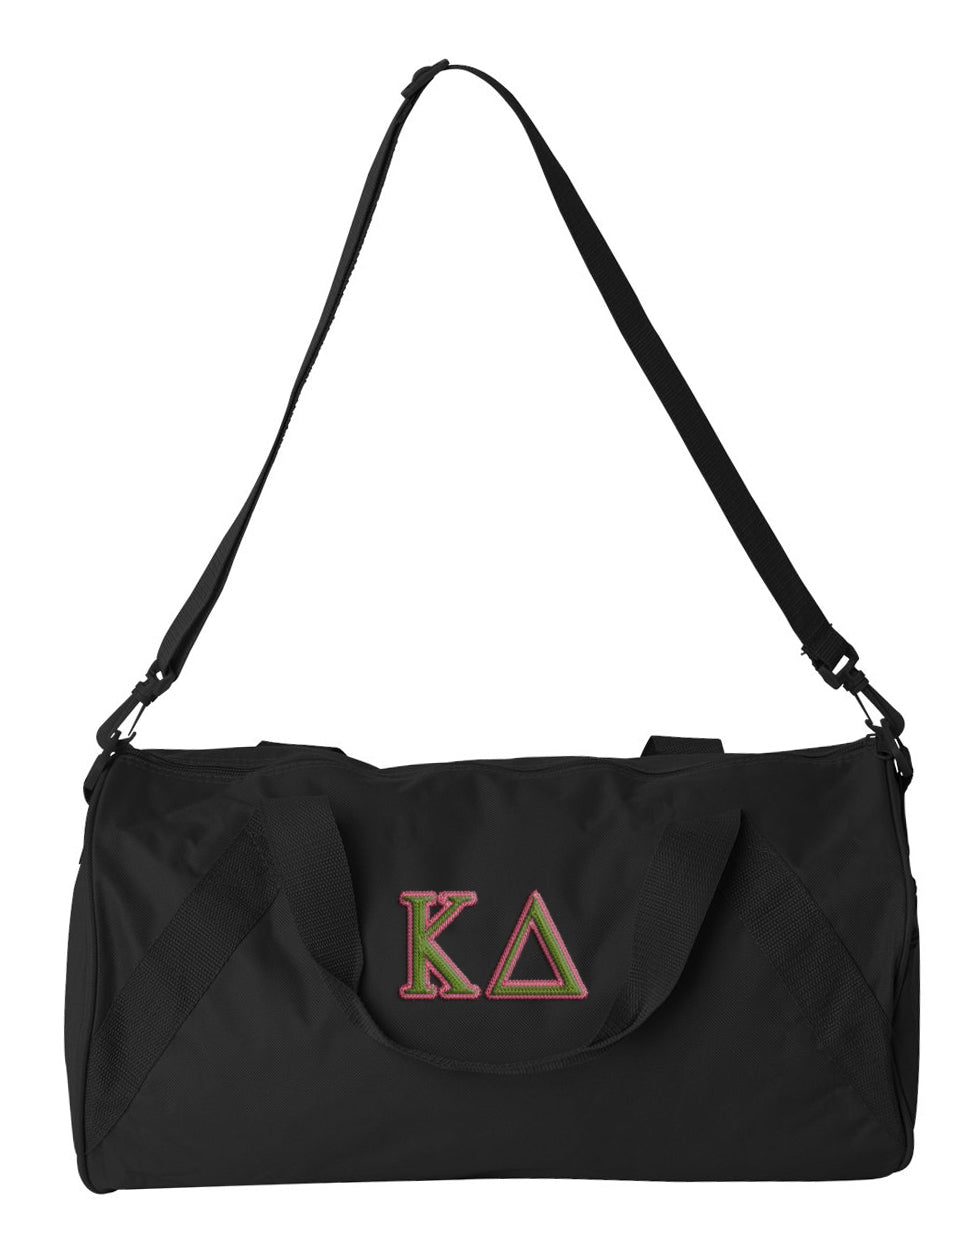 Kappa Delta Embroidered Duffel Bag